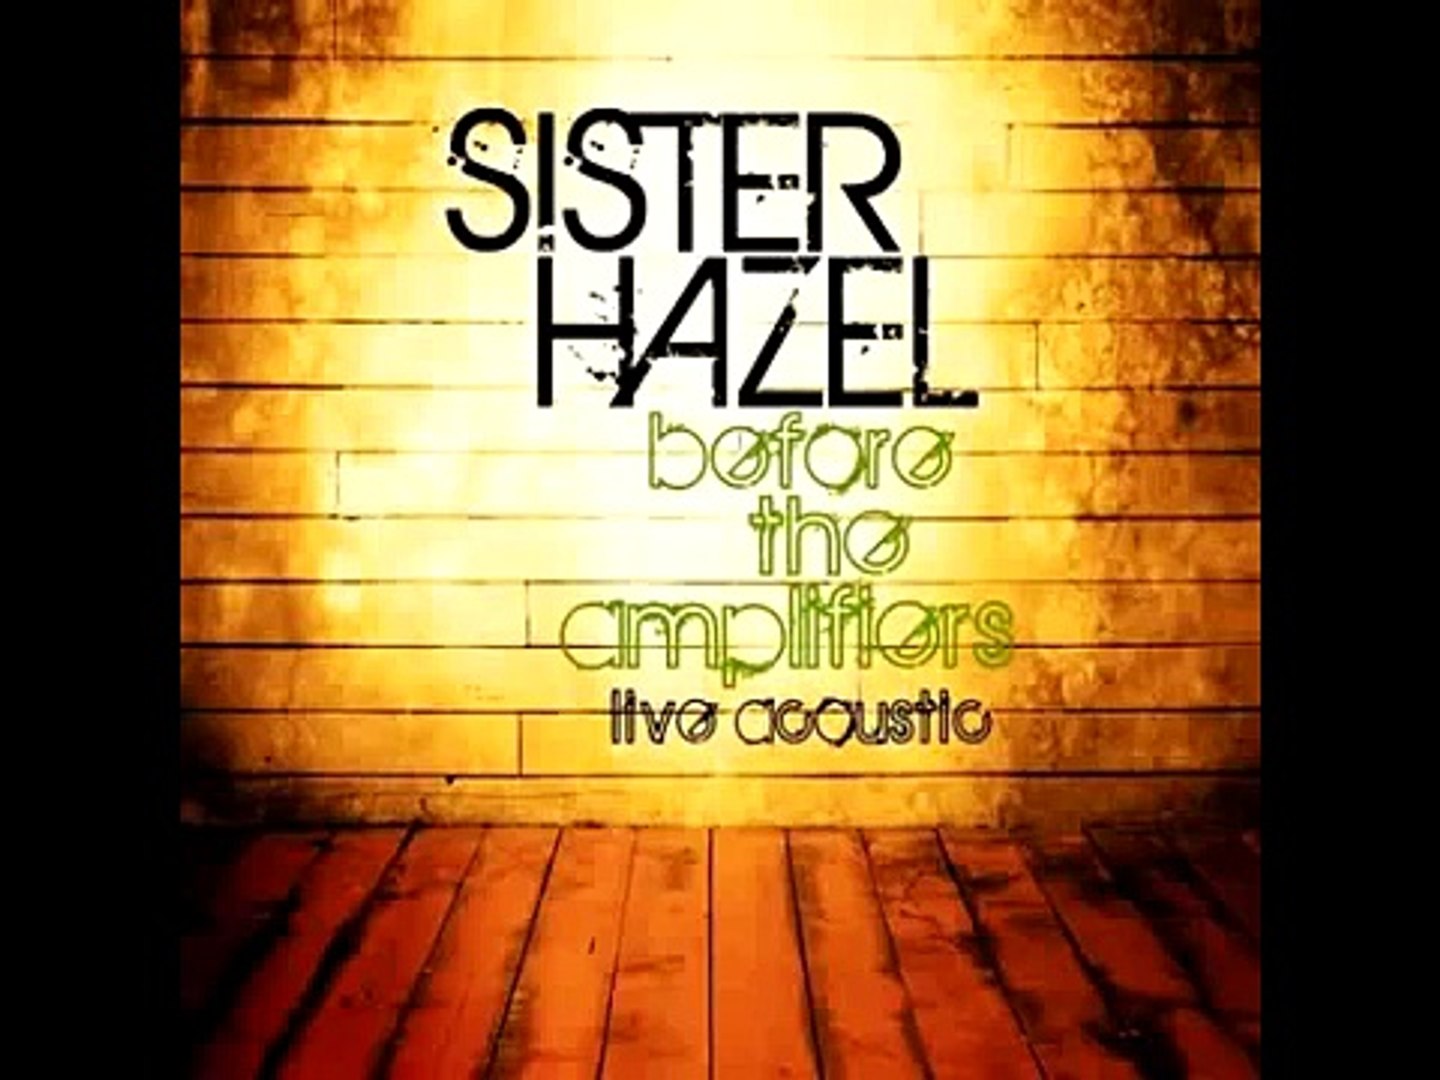 Sister Hazel - Starfish (Acoustic with lyrics)